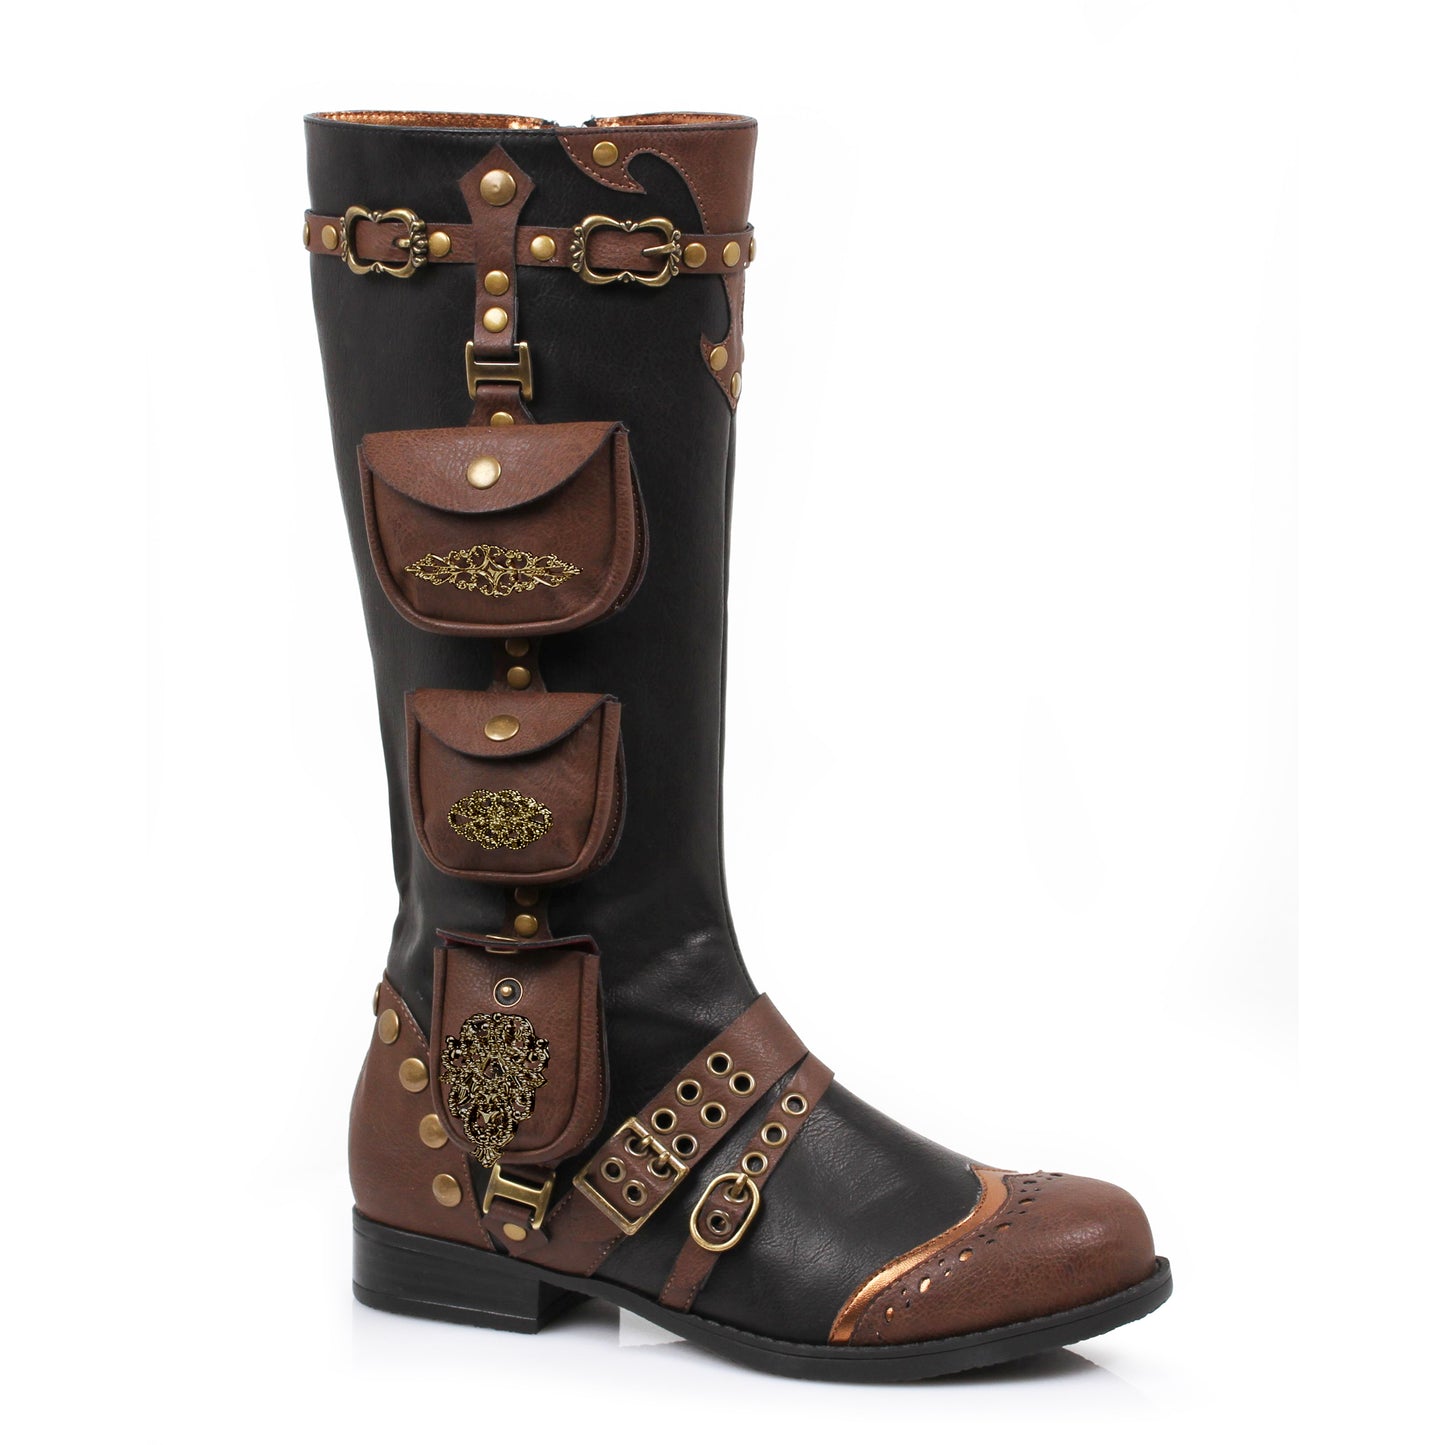 1" Steampunk Knee High Boot